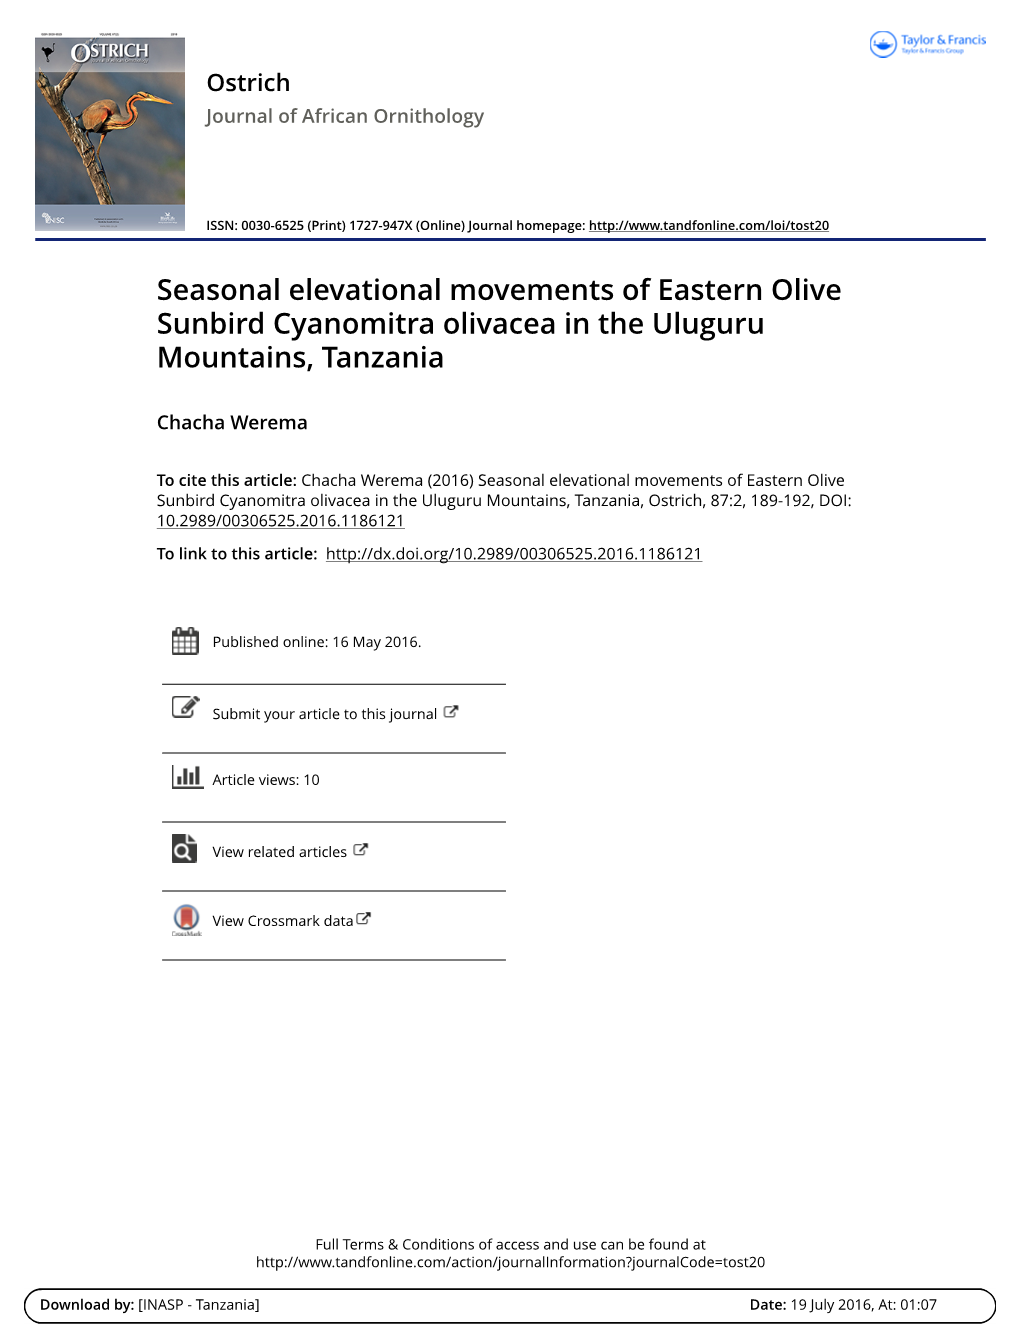 Seasonal Elevational Movements of Eastern Olive Sunbird Cyanomitra Olivacea in the Uluguru Mountains, Tanzania